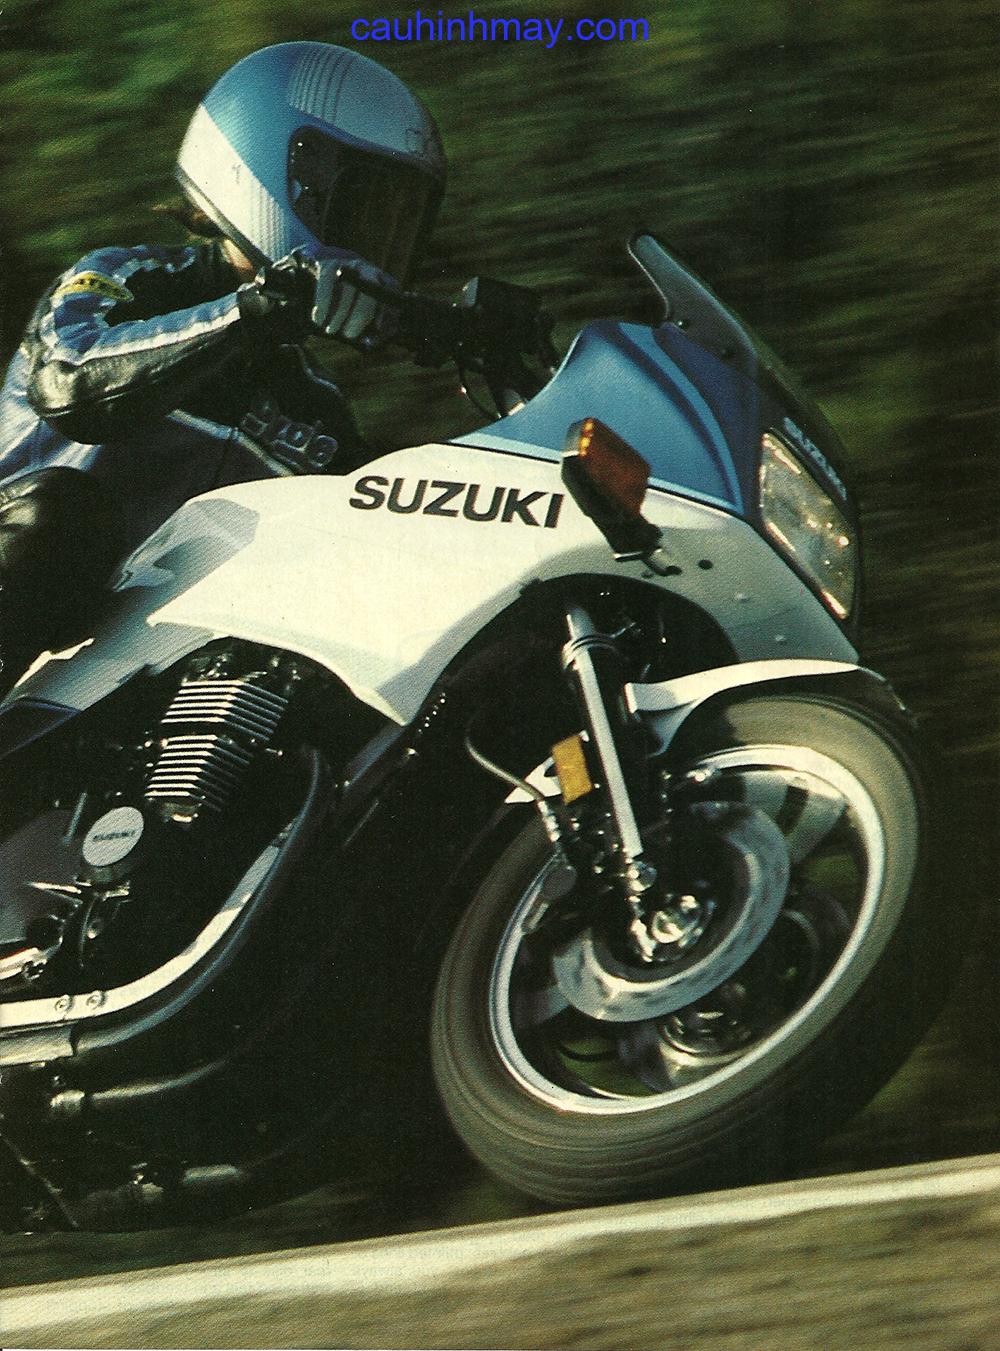 SUZUKI GSX 550ES - cauhinhmay.com